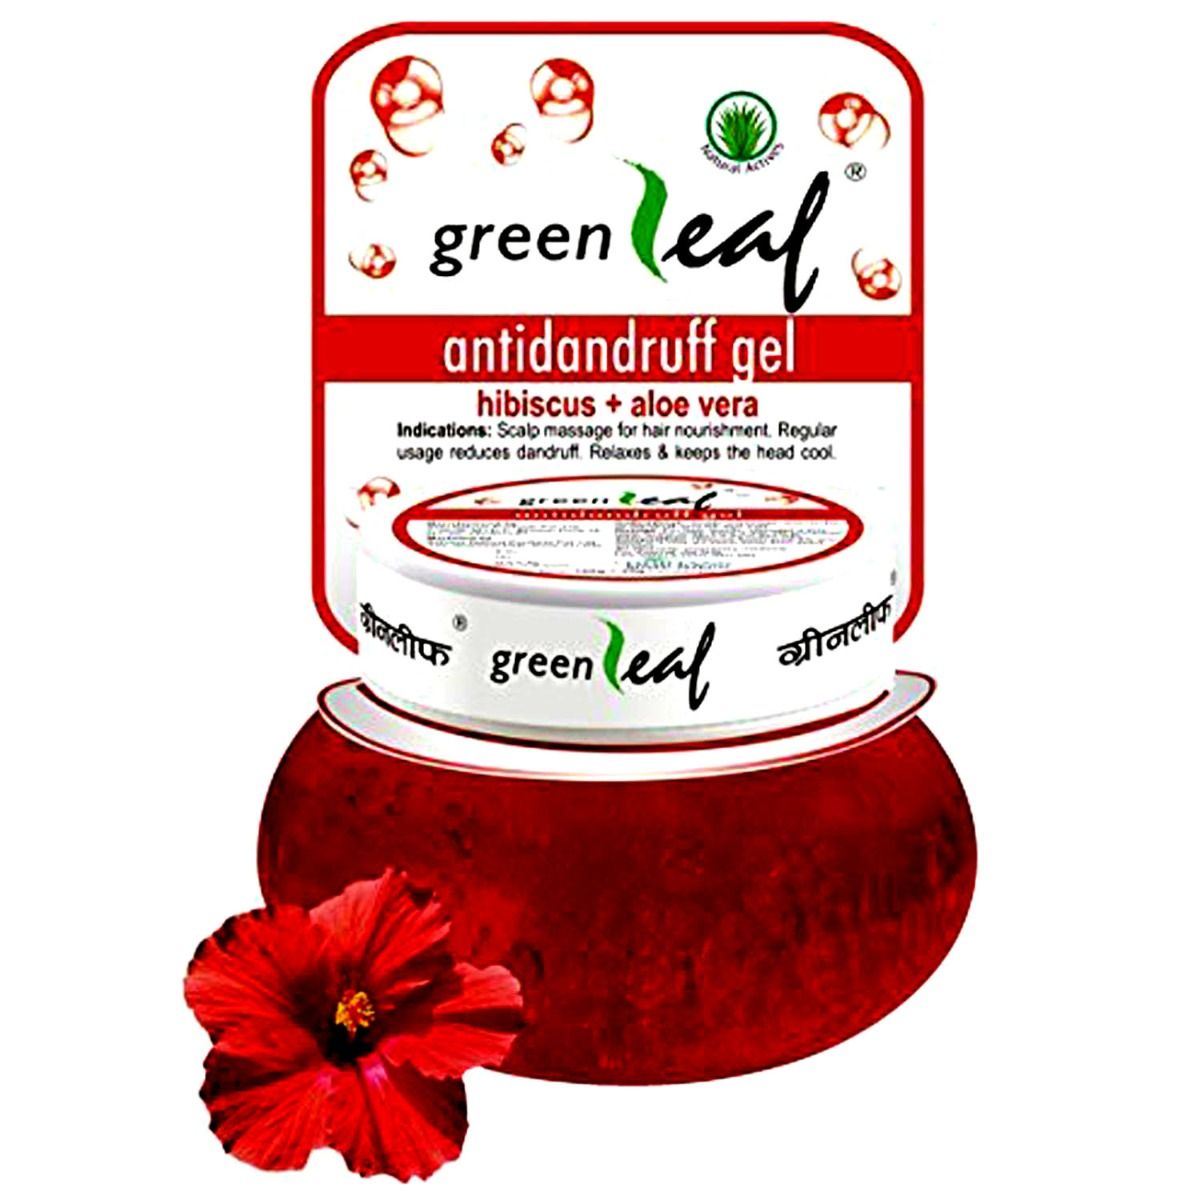 Buy Green Leaf Anti-Dandruff Hibiscus + Aloe Vera Hair Gel, 120 gm Online